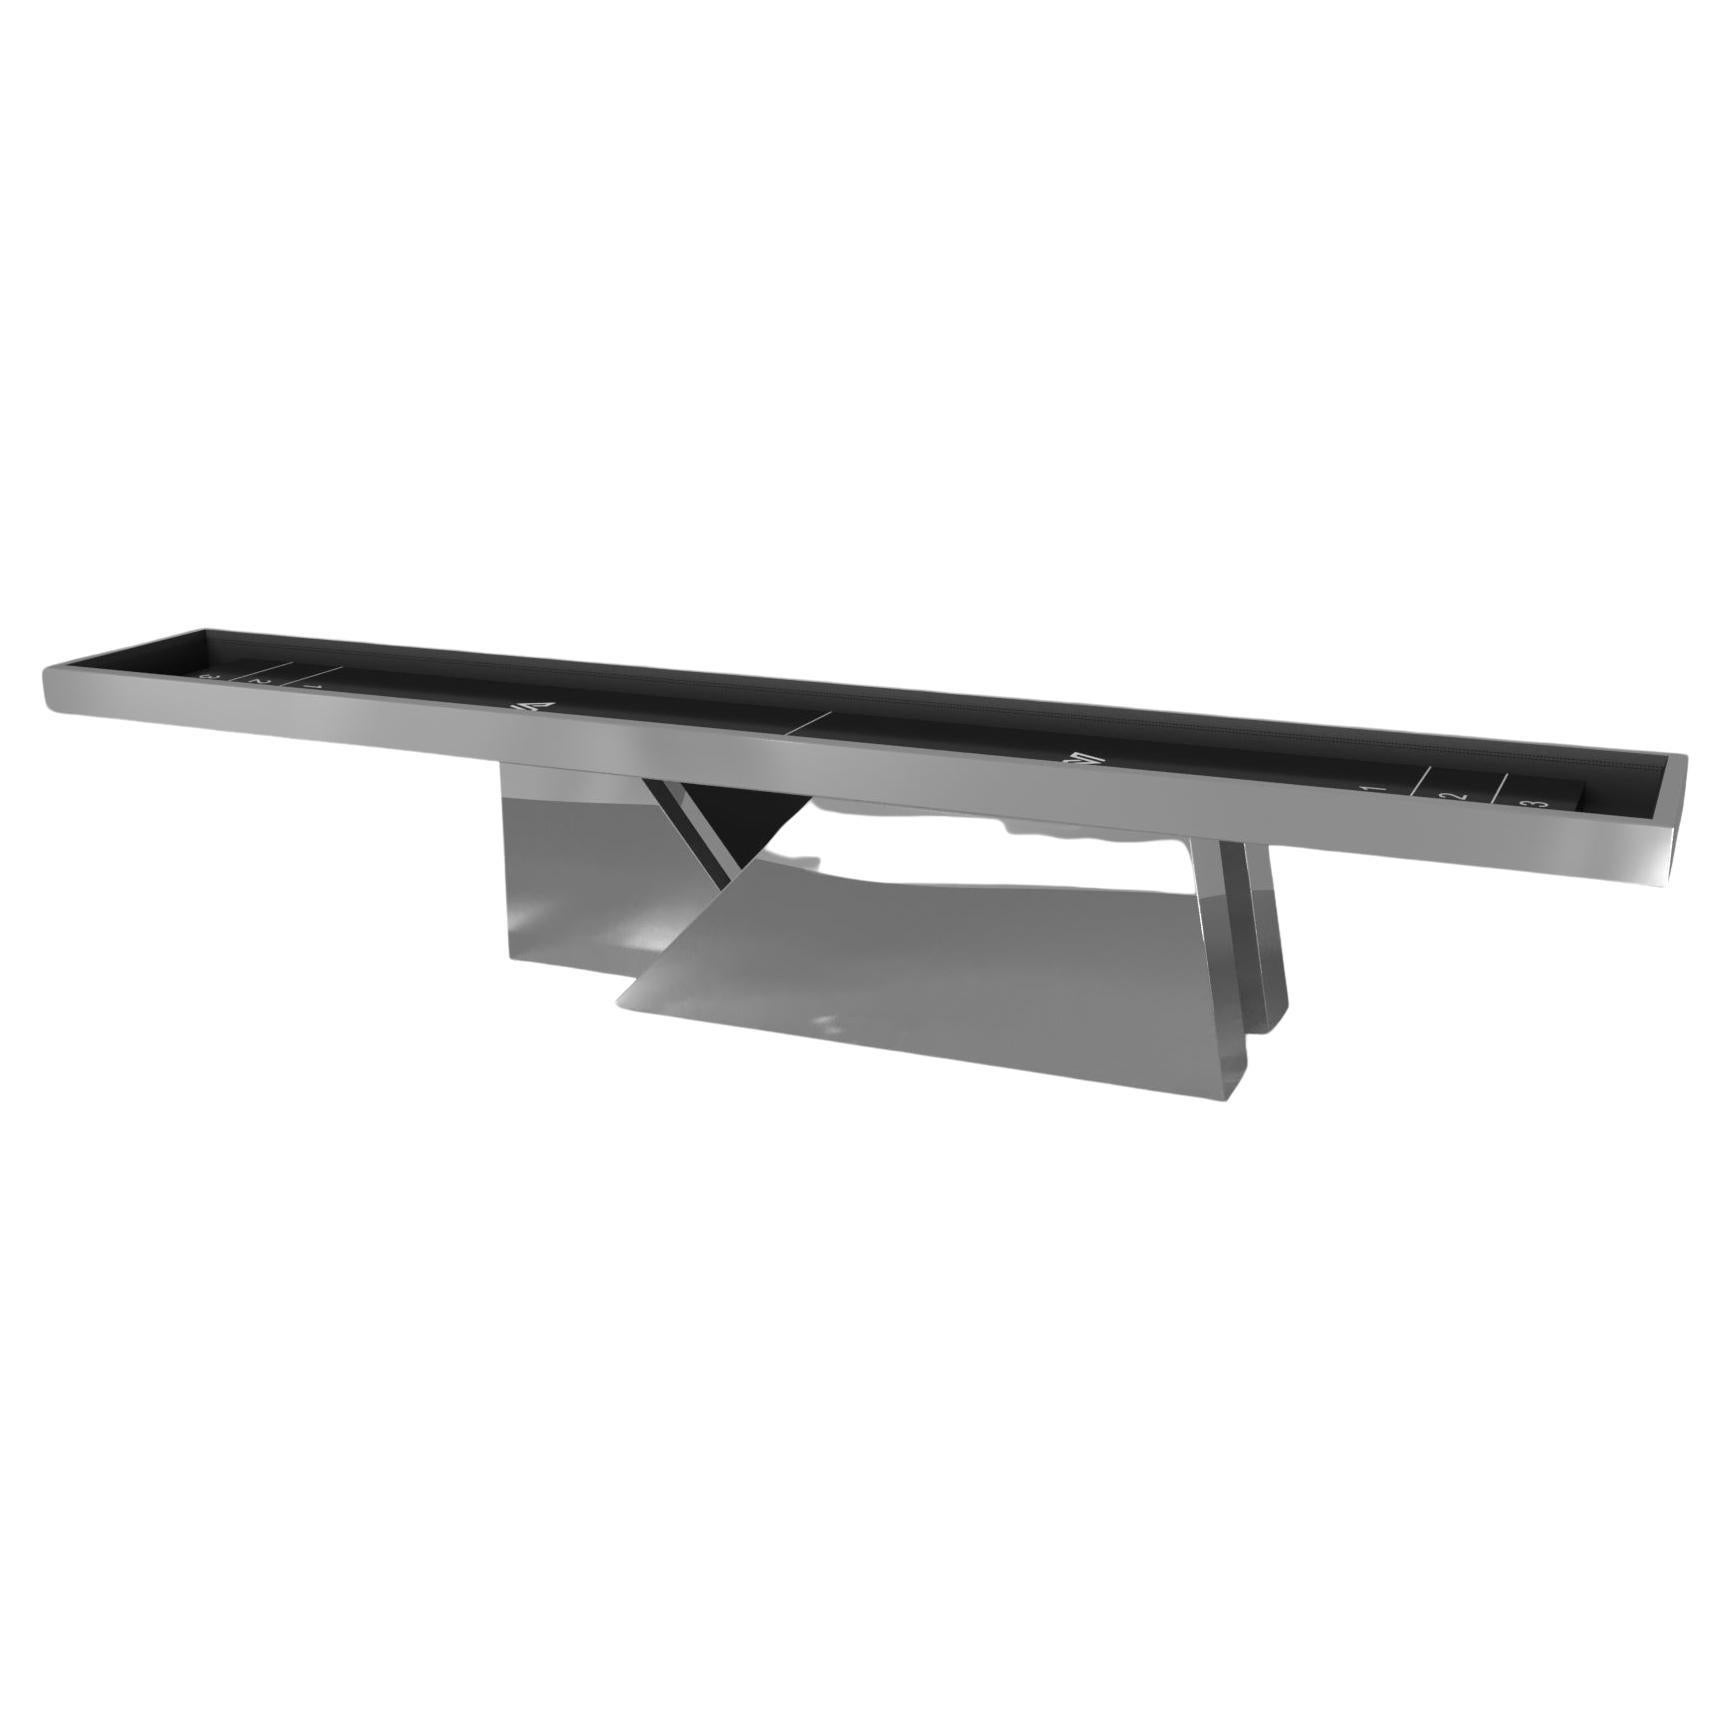 Elevate Customs Stilt Shuffleboard Tables/Stainless Steel Sheet Metal in 14'-USA